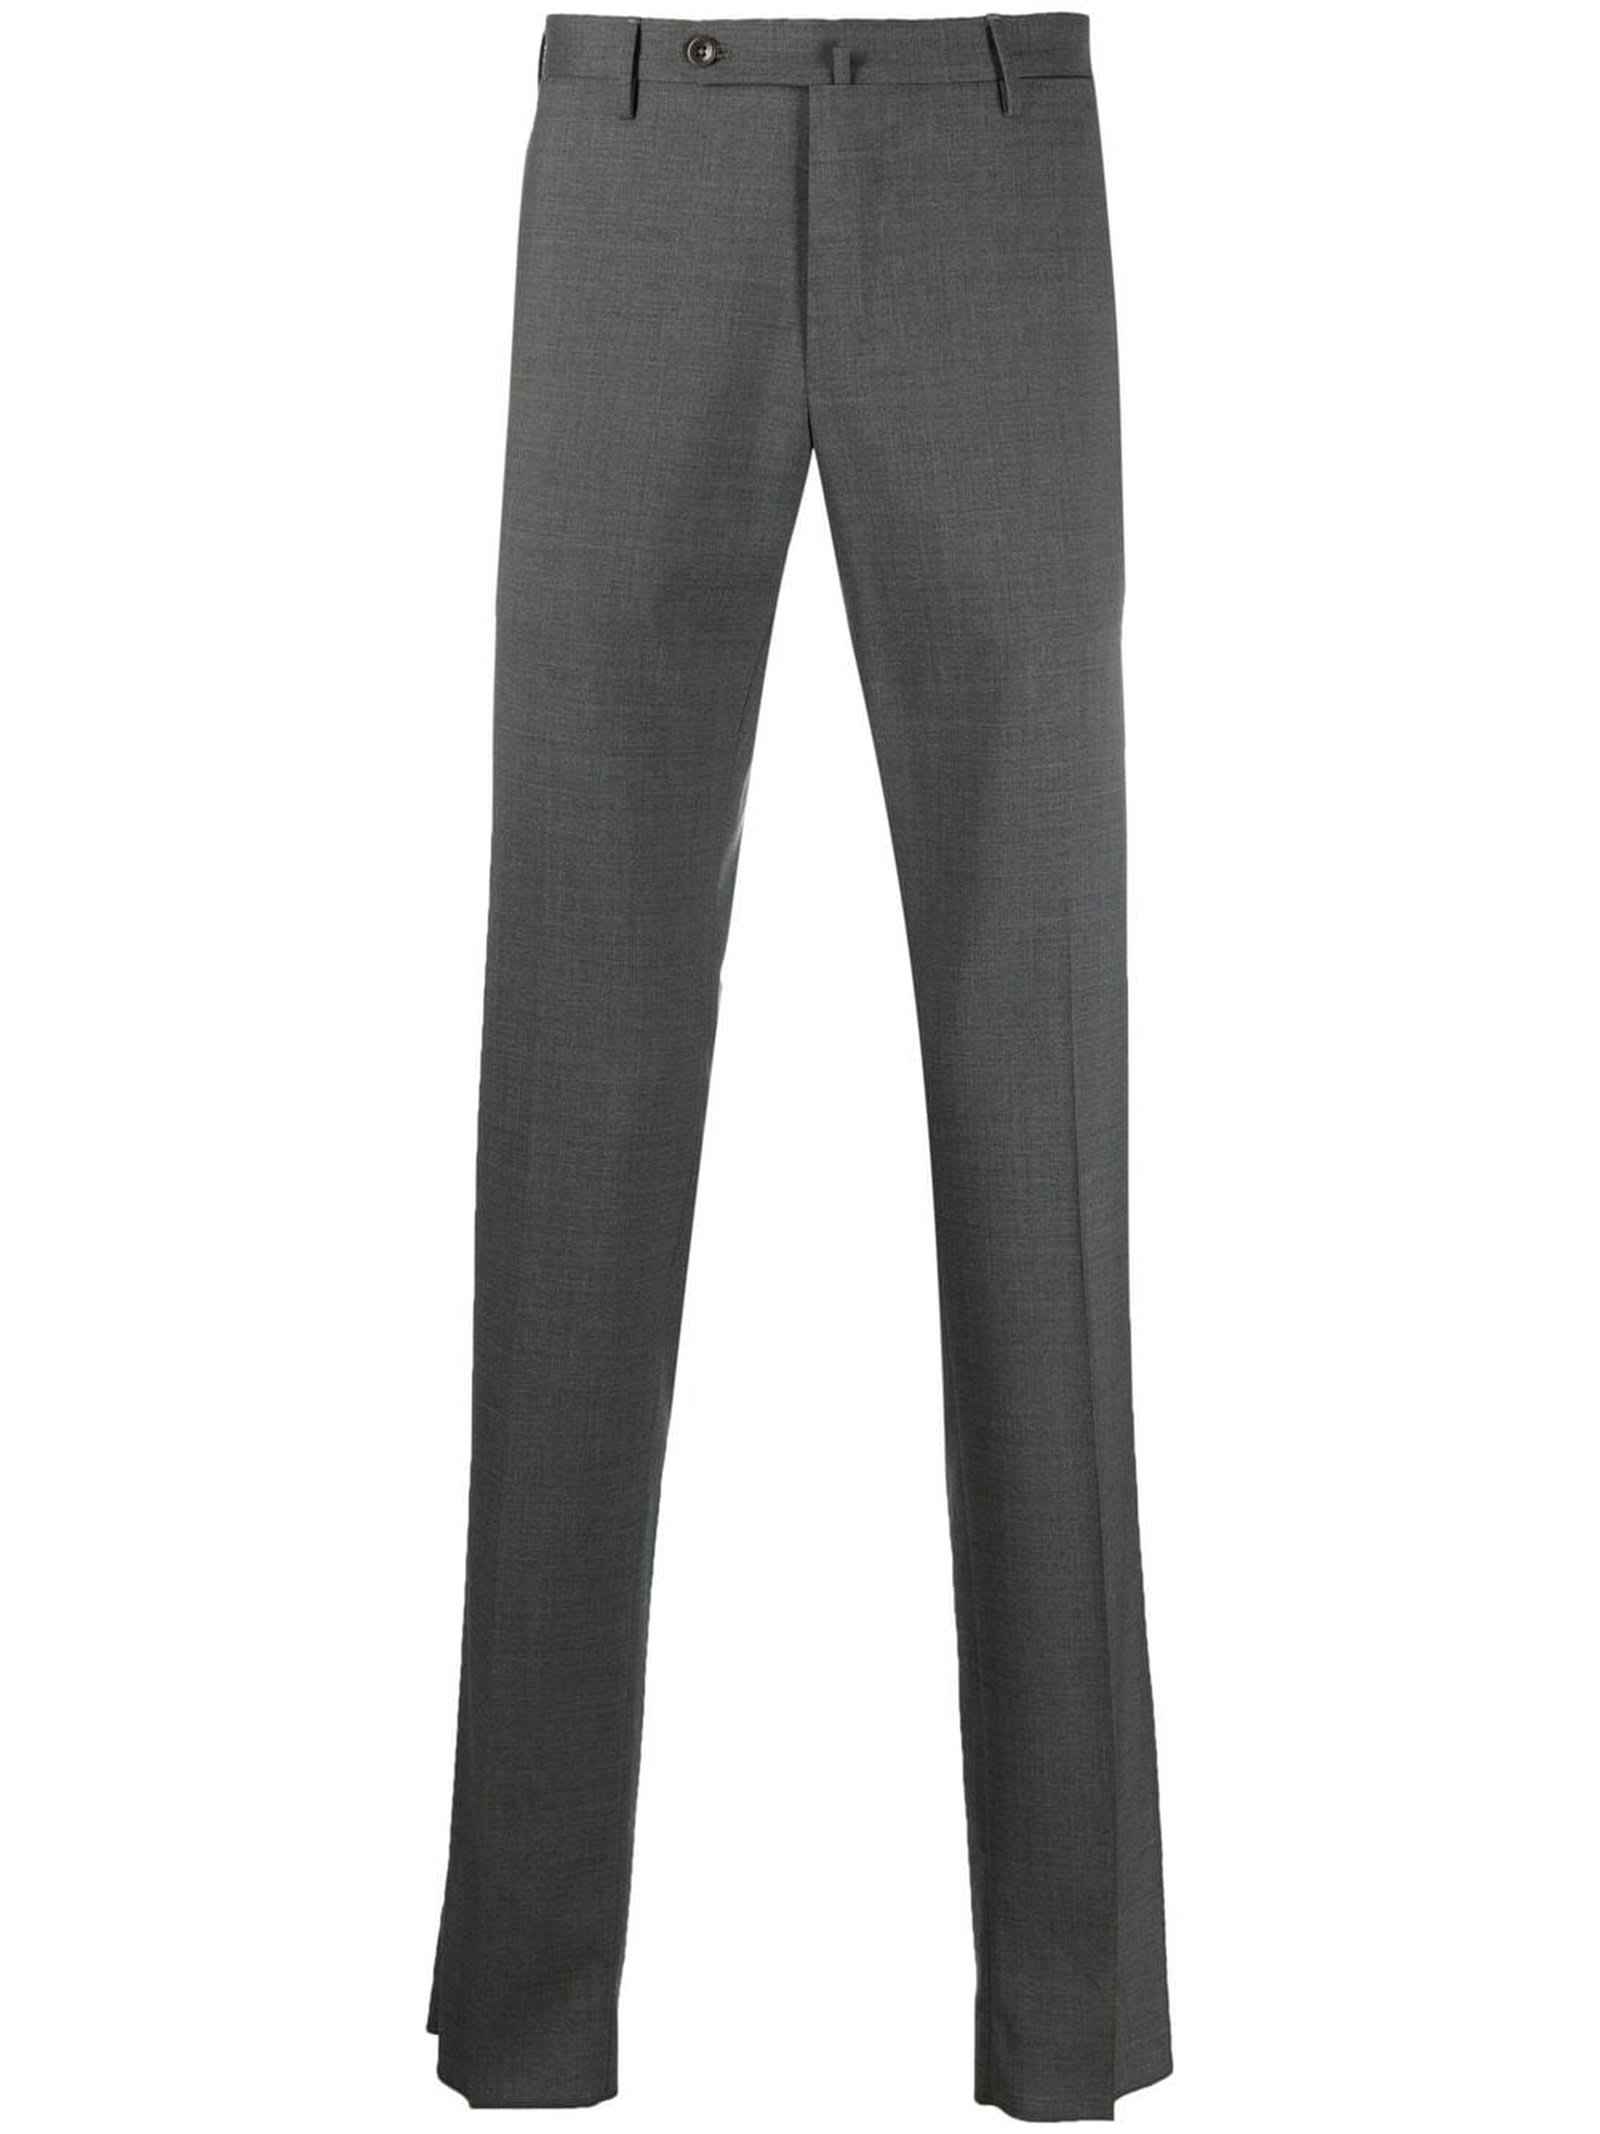 Incotex Grey Virgin Wool Tailored Trousers